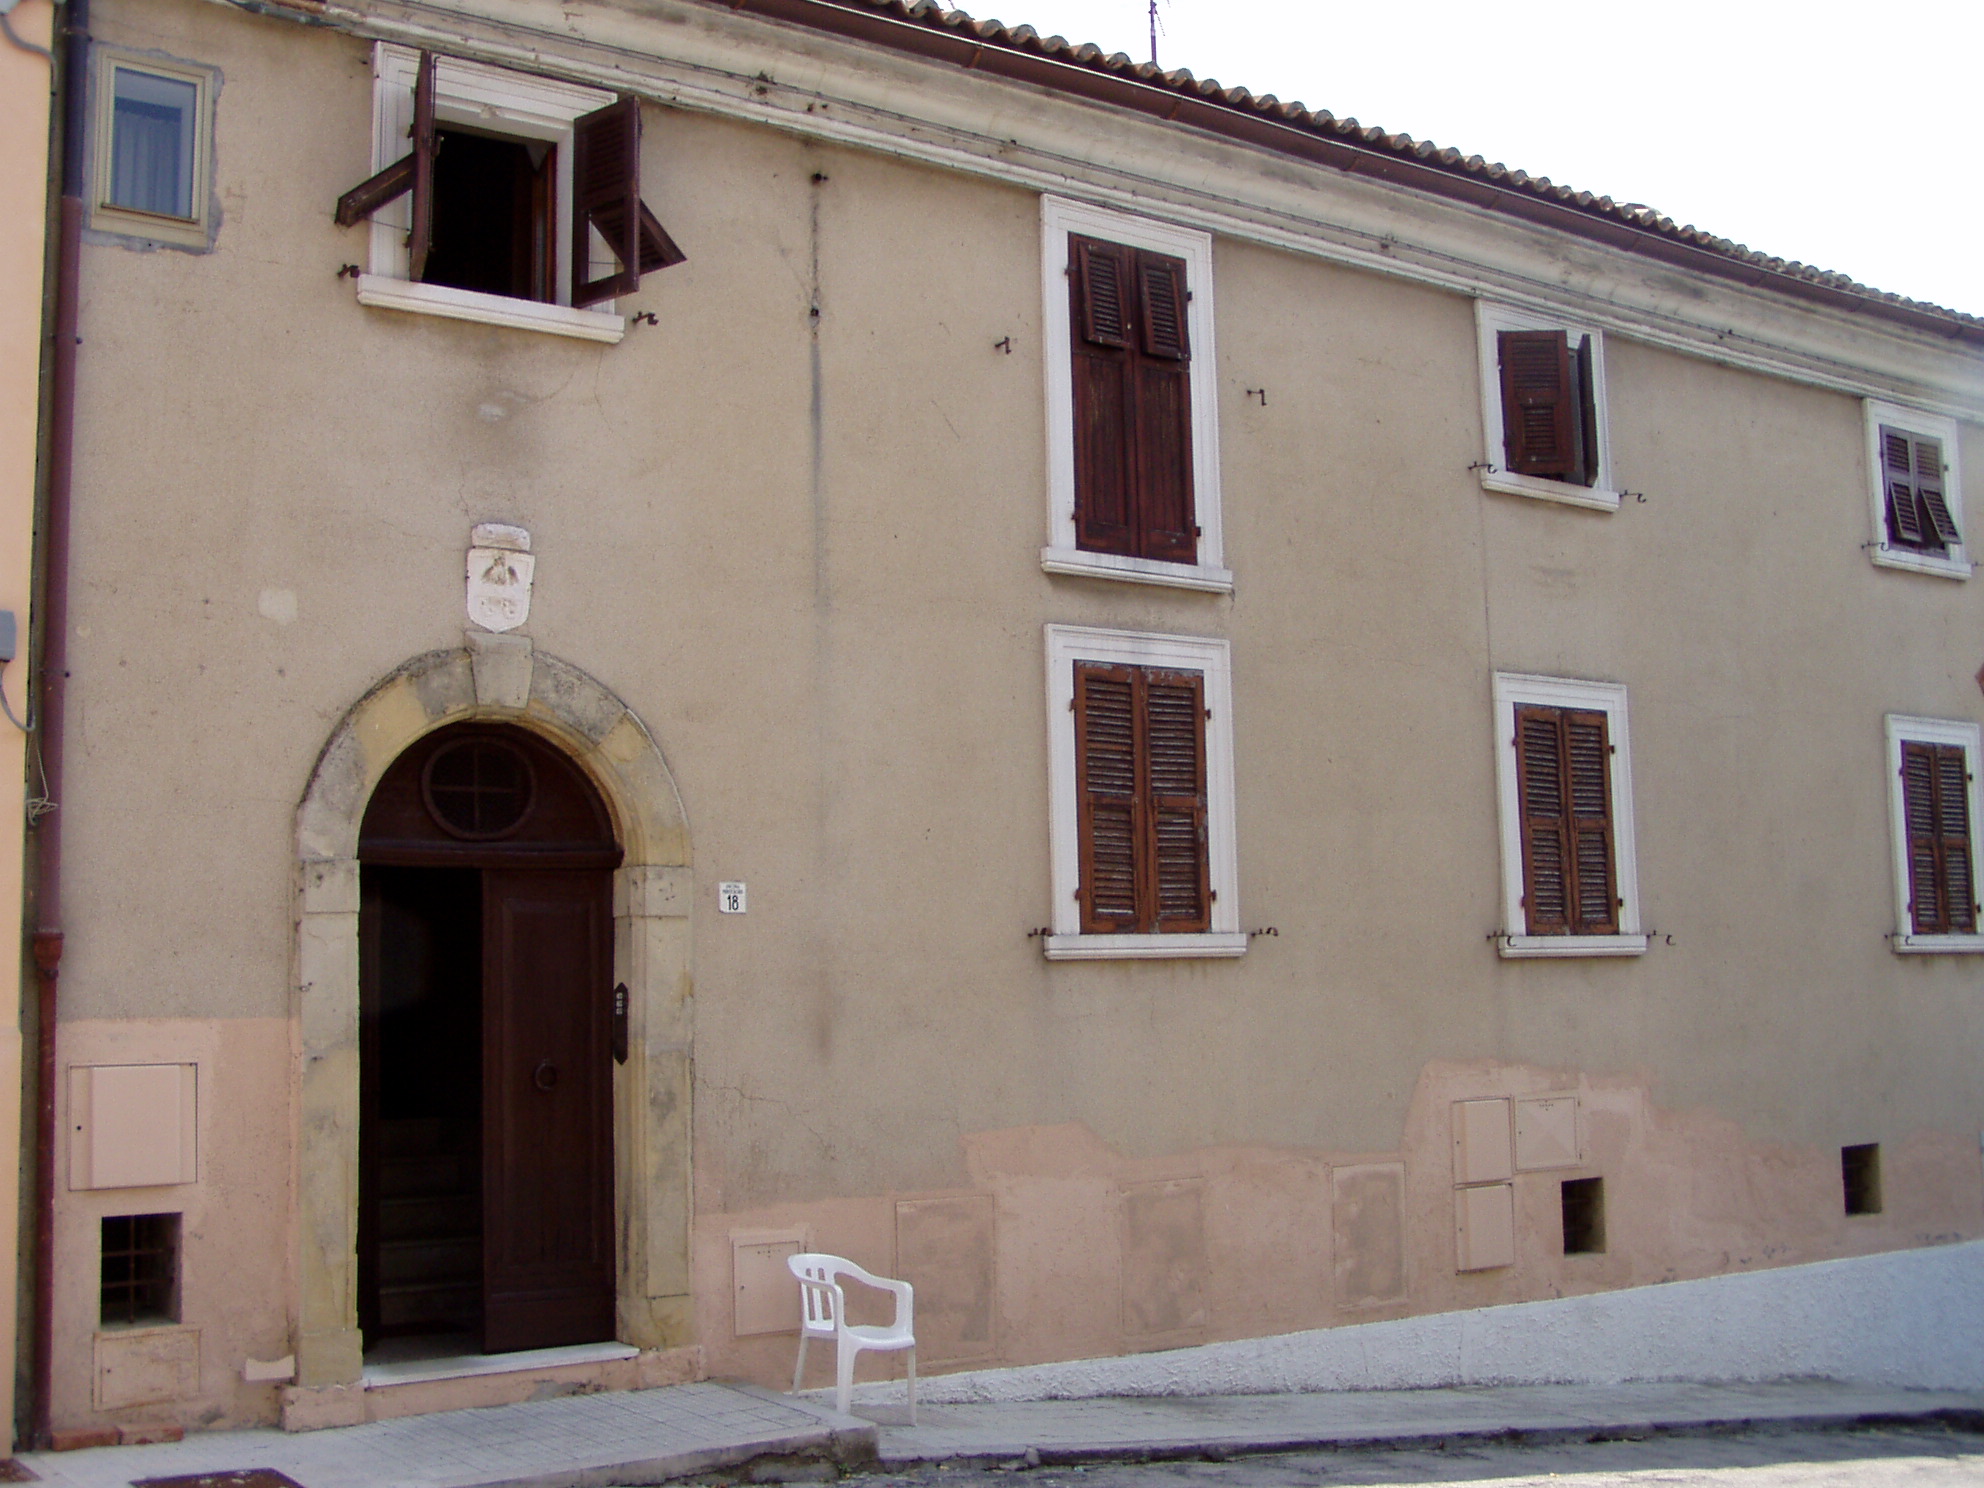 Palazzo Bacelli (palazzo, nobiliare) - Ancona (AN) 